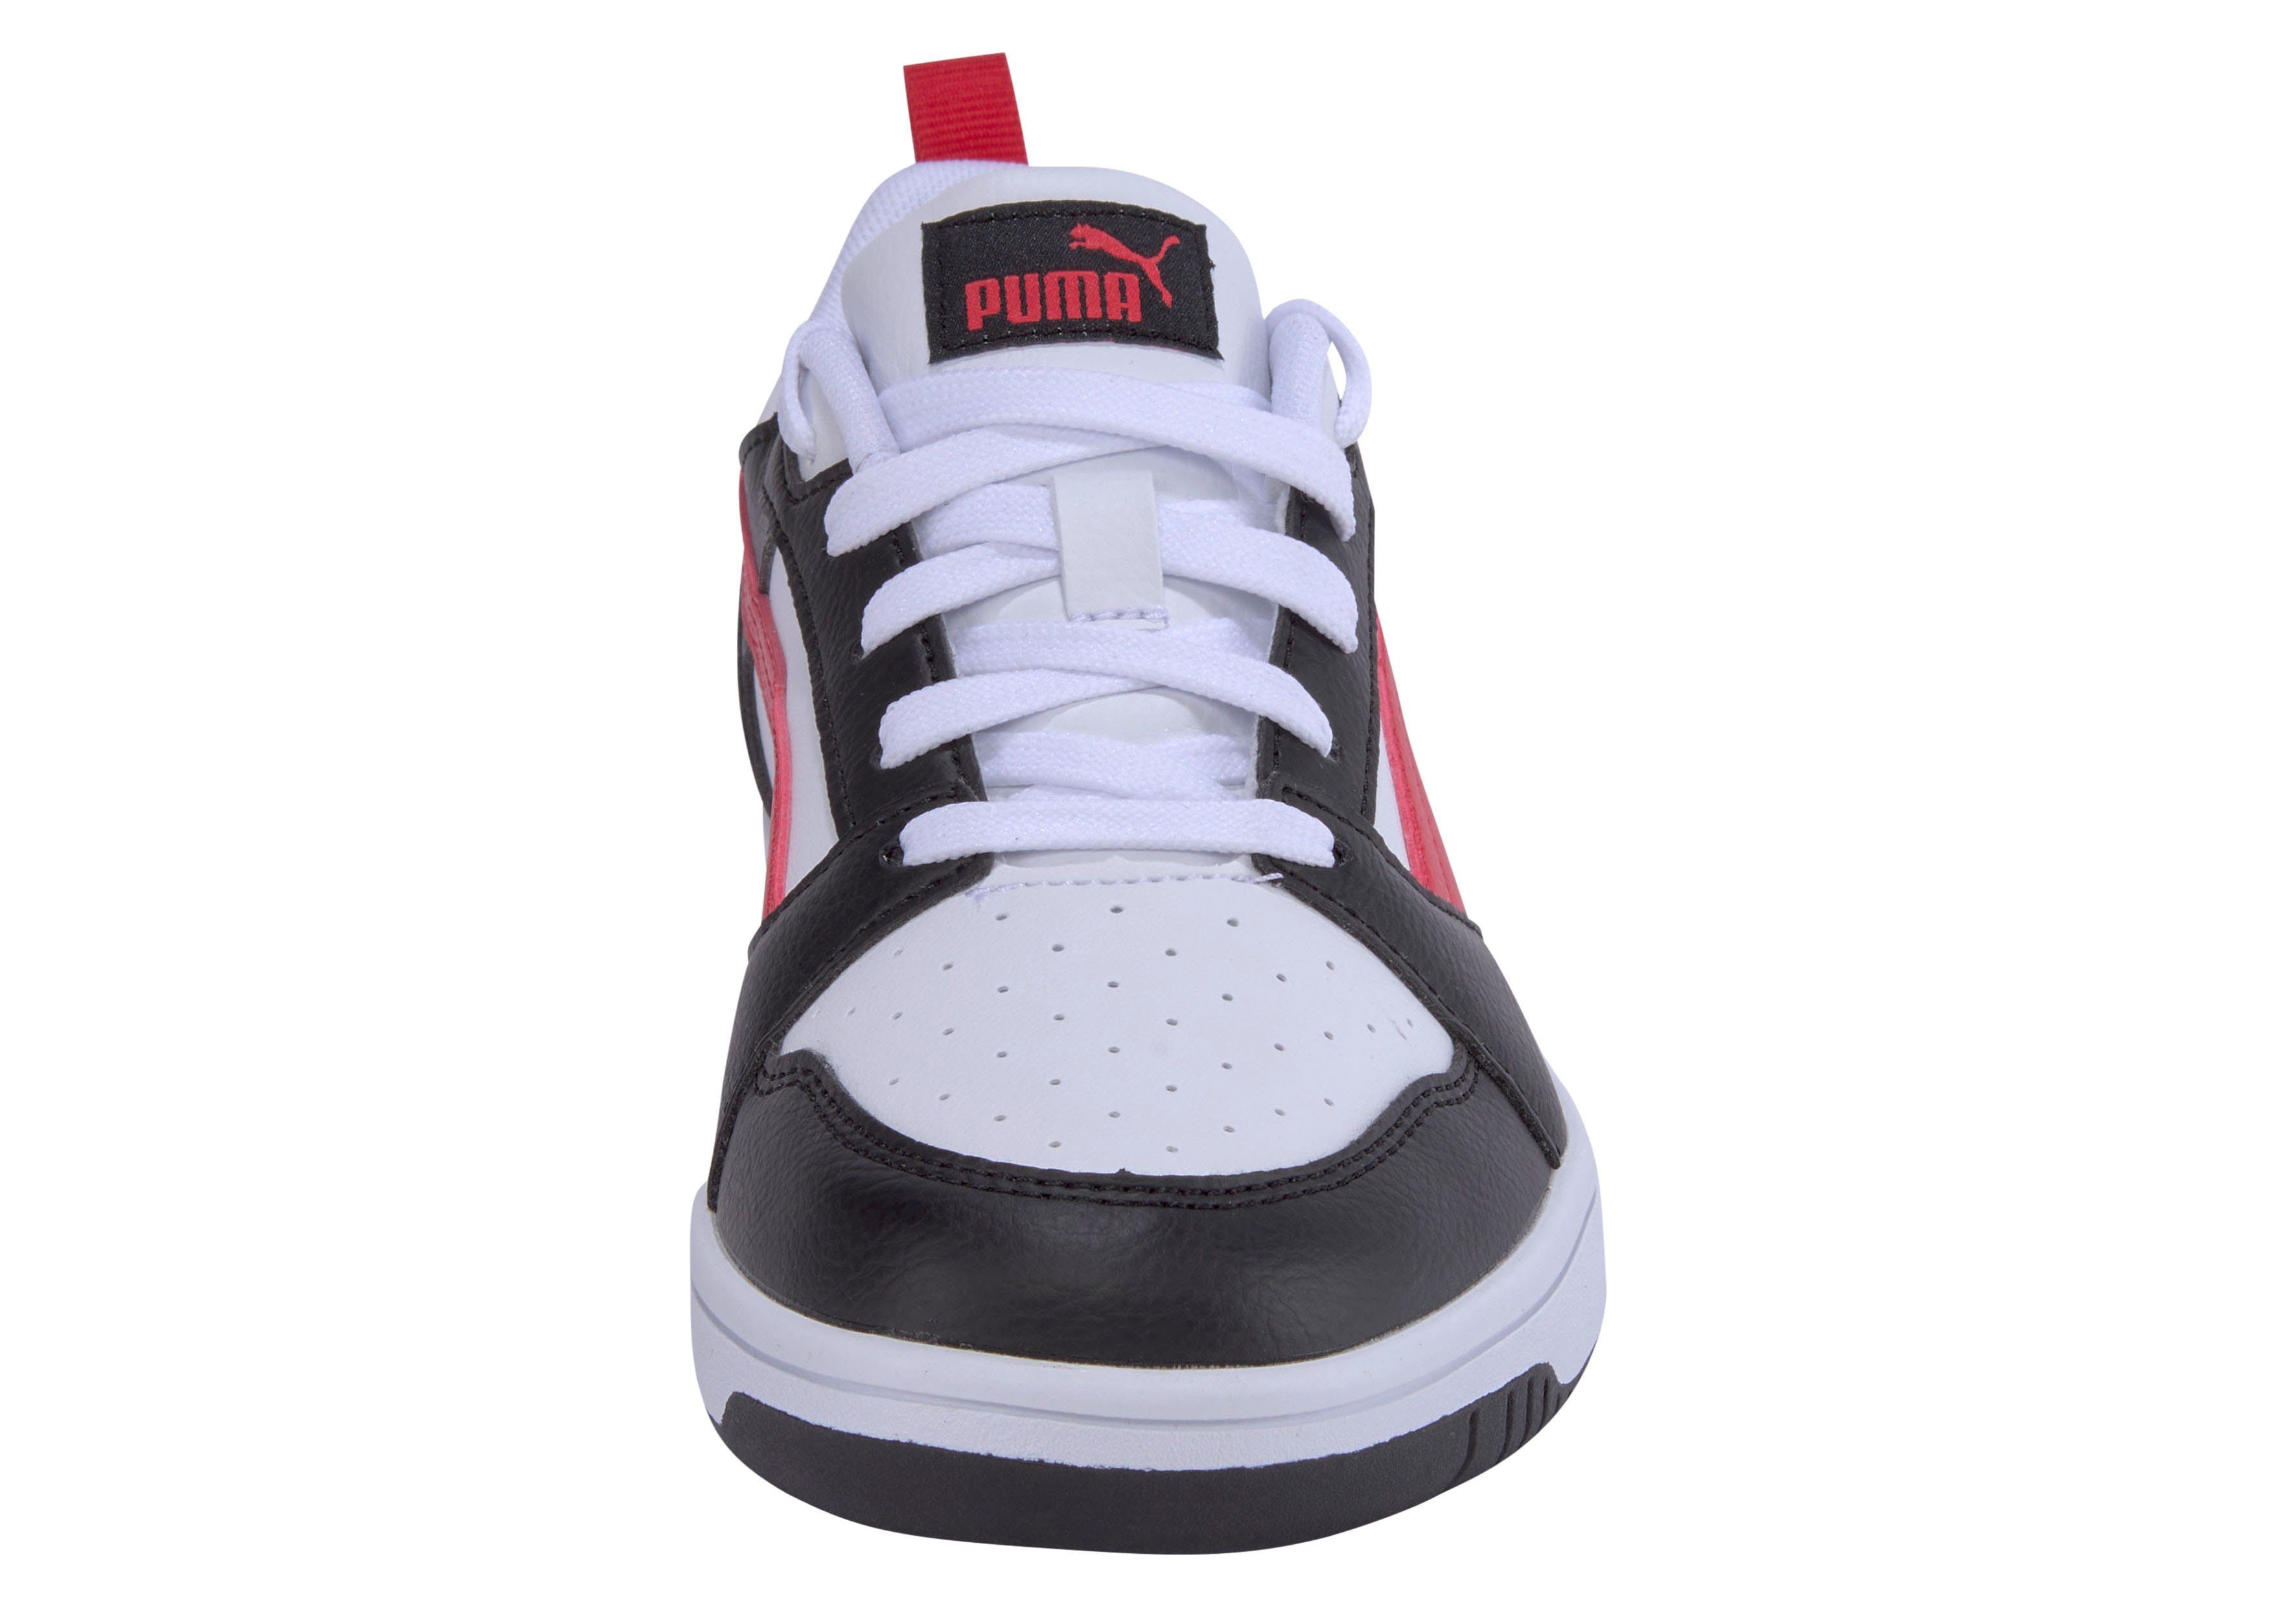 PUMA REBOUND PUMA Sneaker White-For Black PS LO V6 Red-PUMA Time All